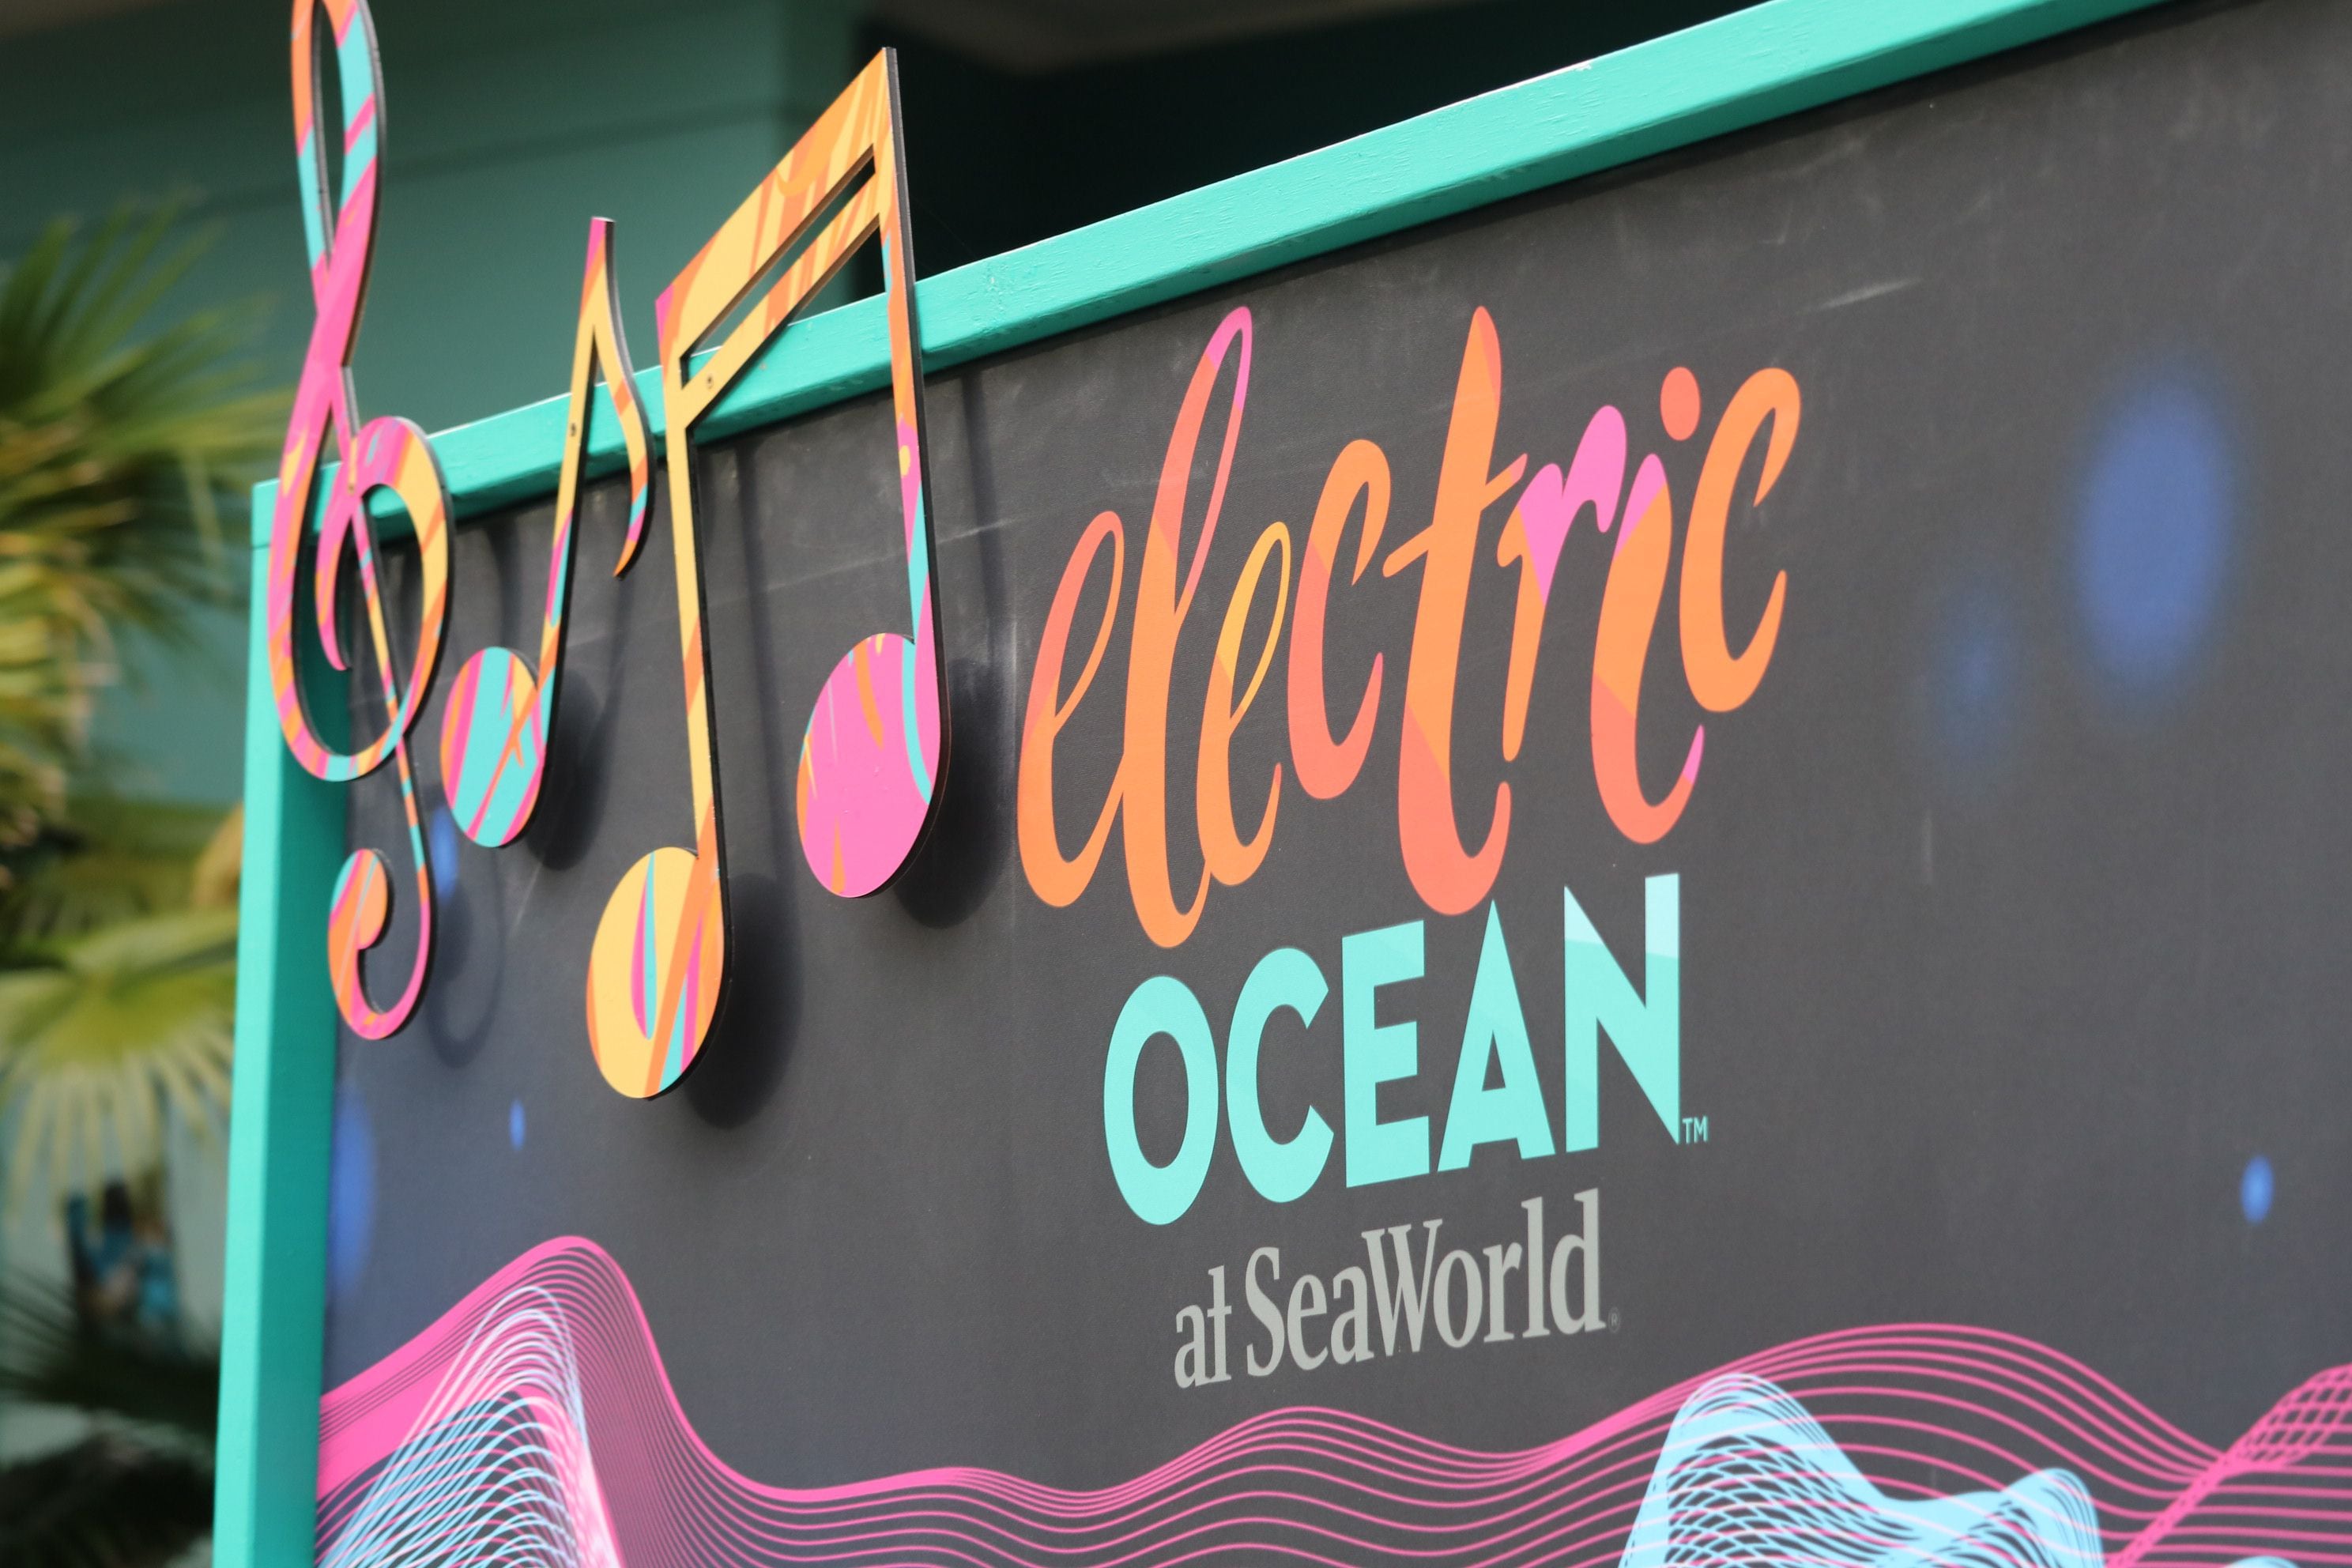 SeaWorld Orlando adds concert series to Electric Ocean event Orlando